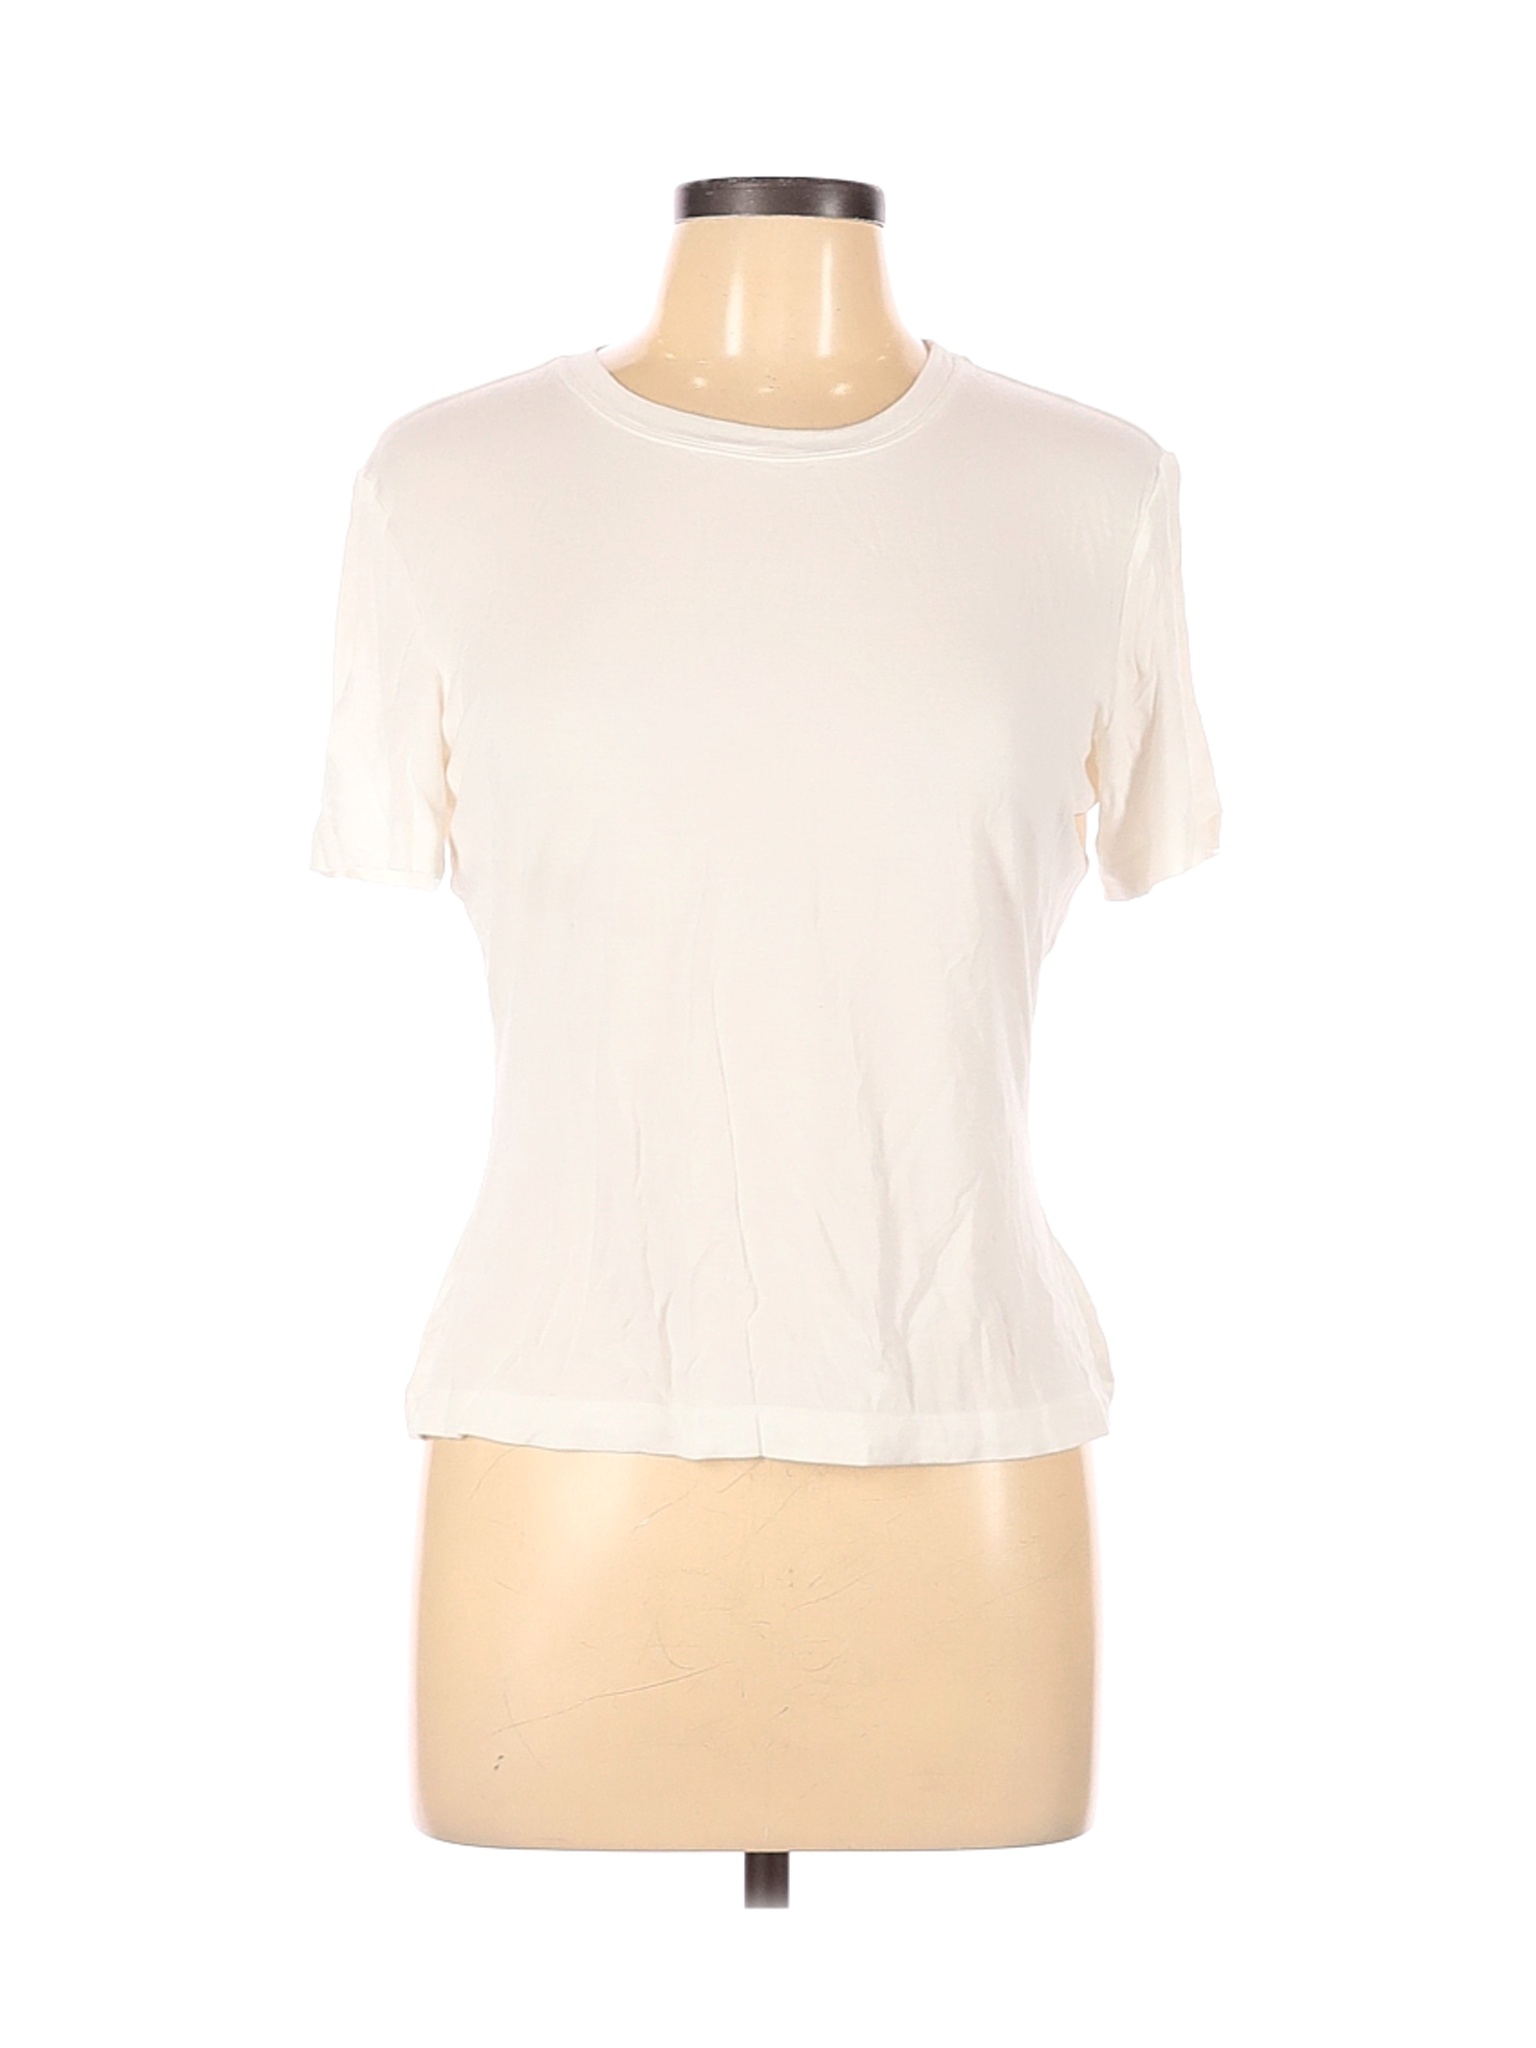 St. John Women Ivory Short Sleeve T-Shirt L | eBay